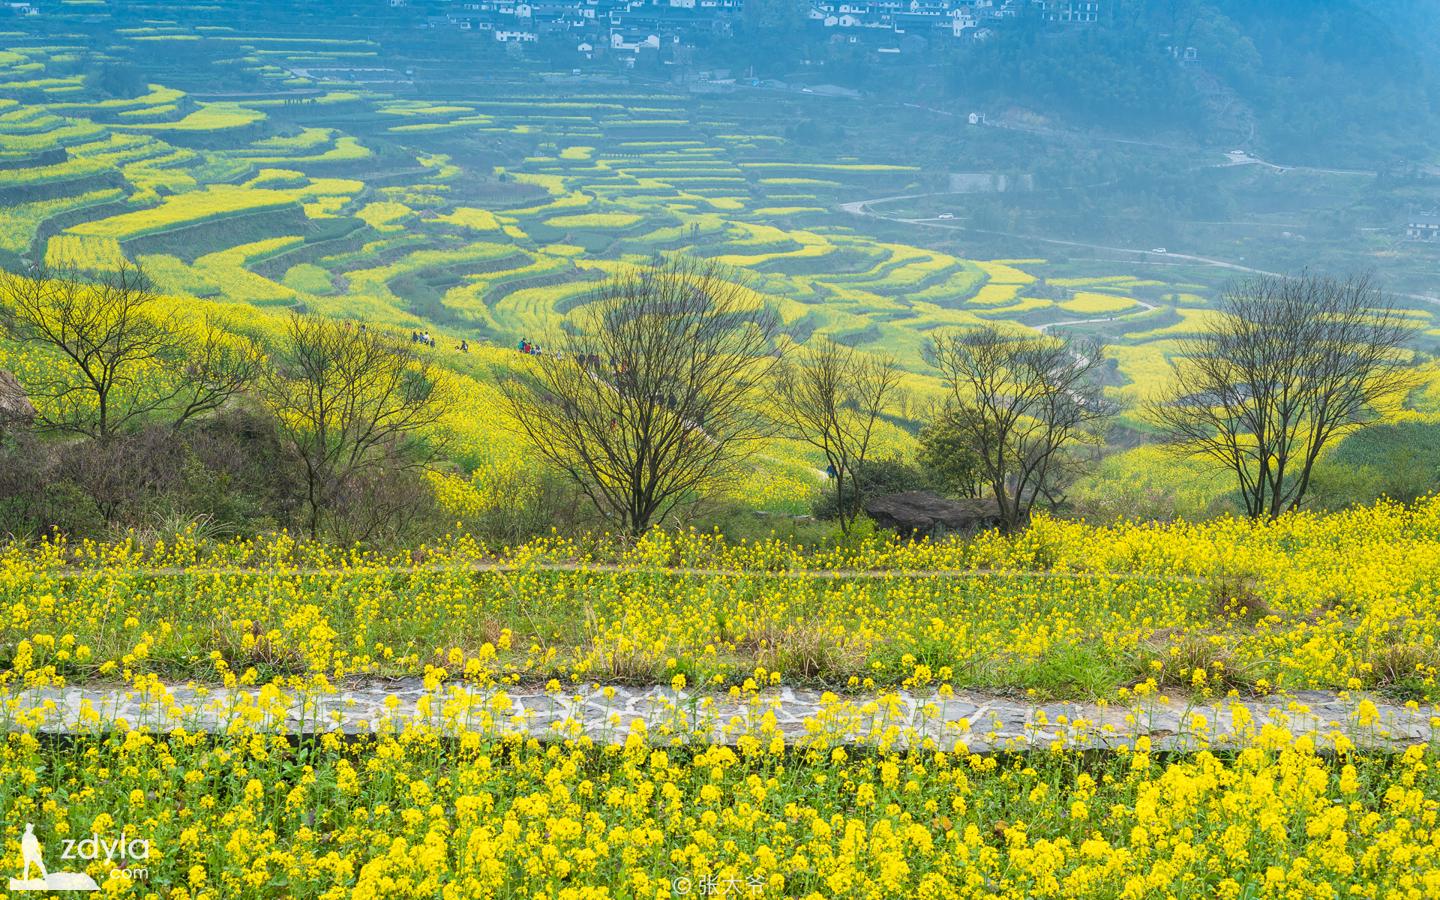 Fuzhi mountain, Rape flower